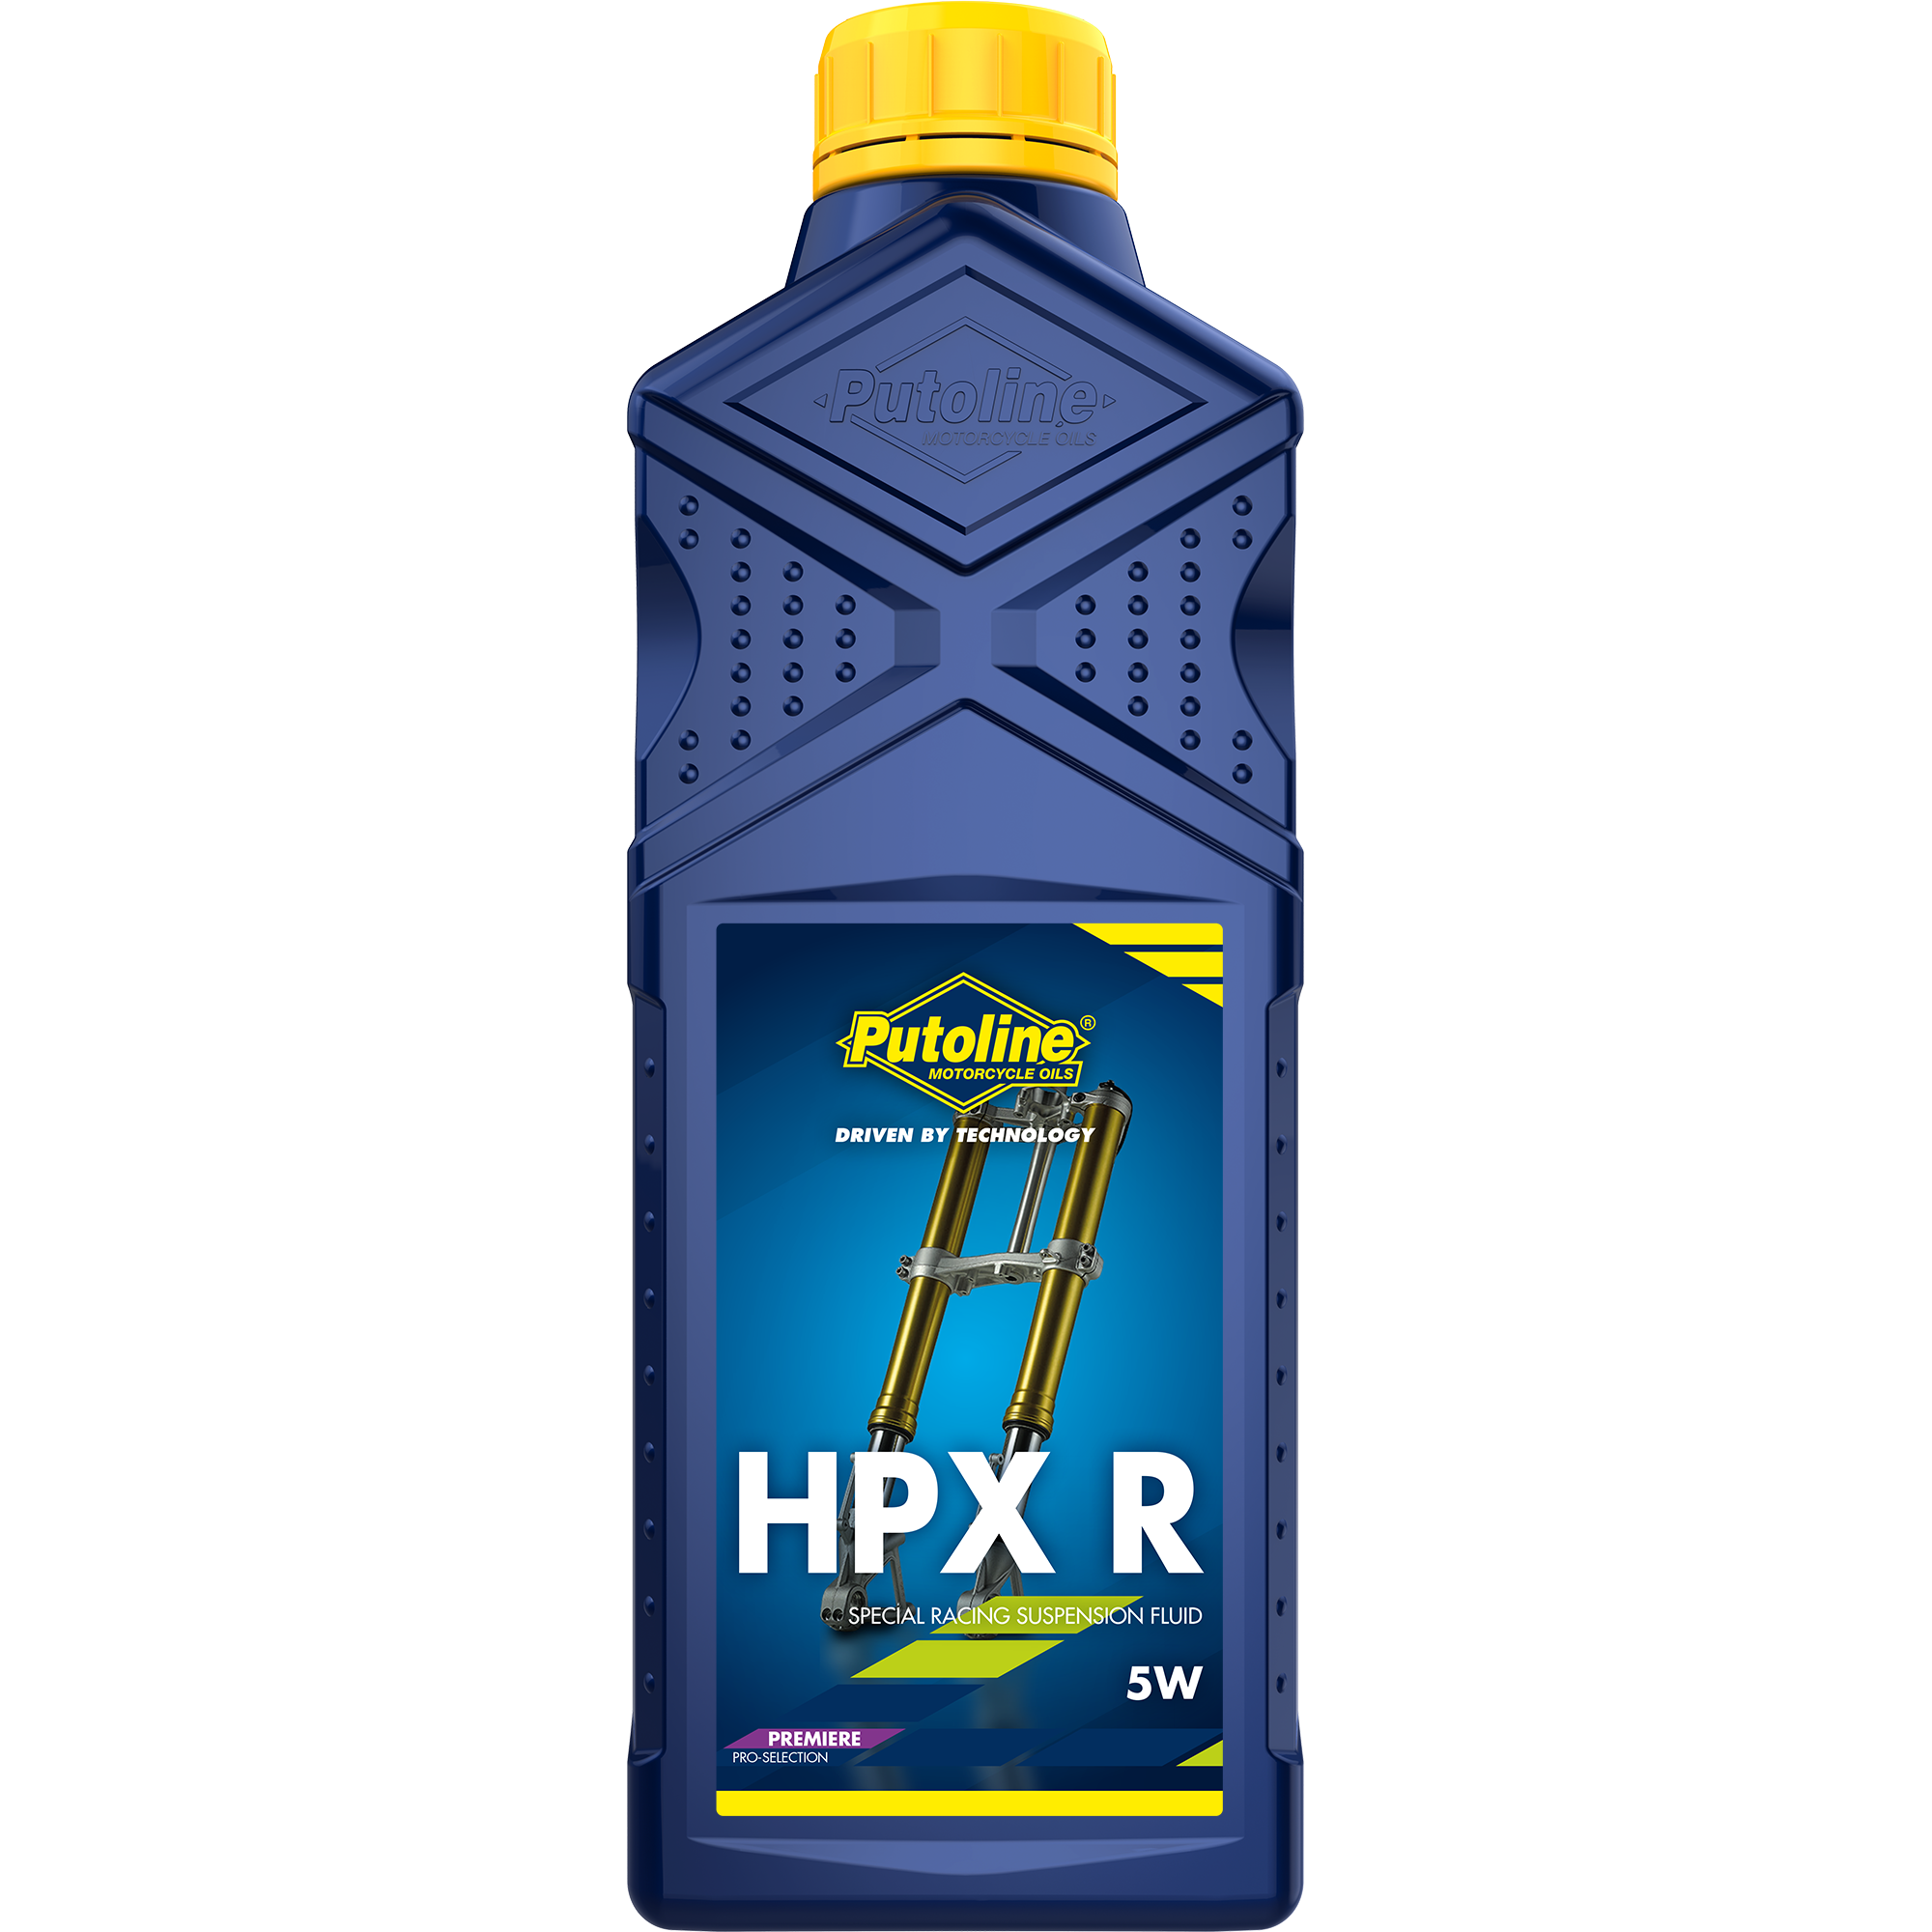 Putoline HPX R 5W, 12 x 1 lt detail 2